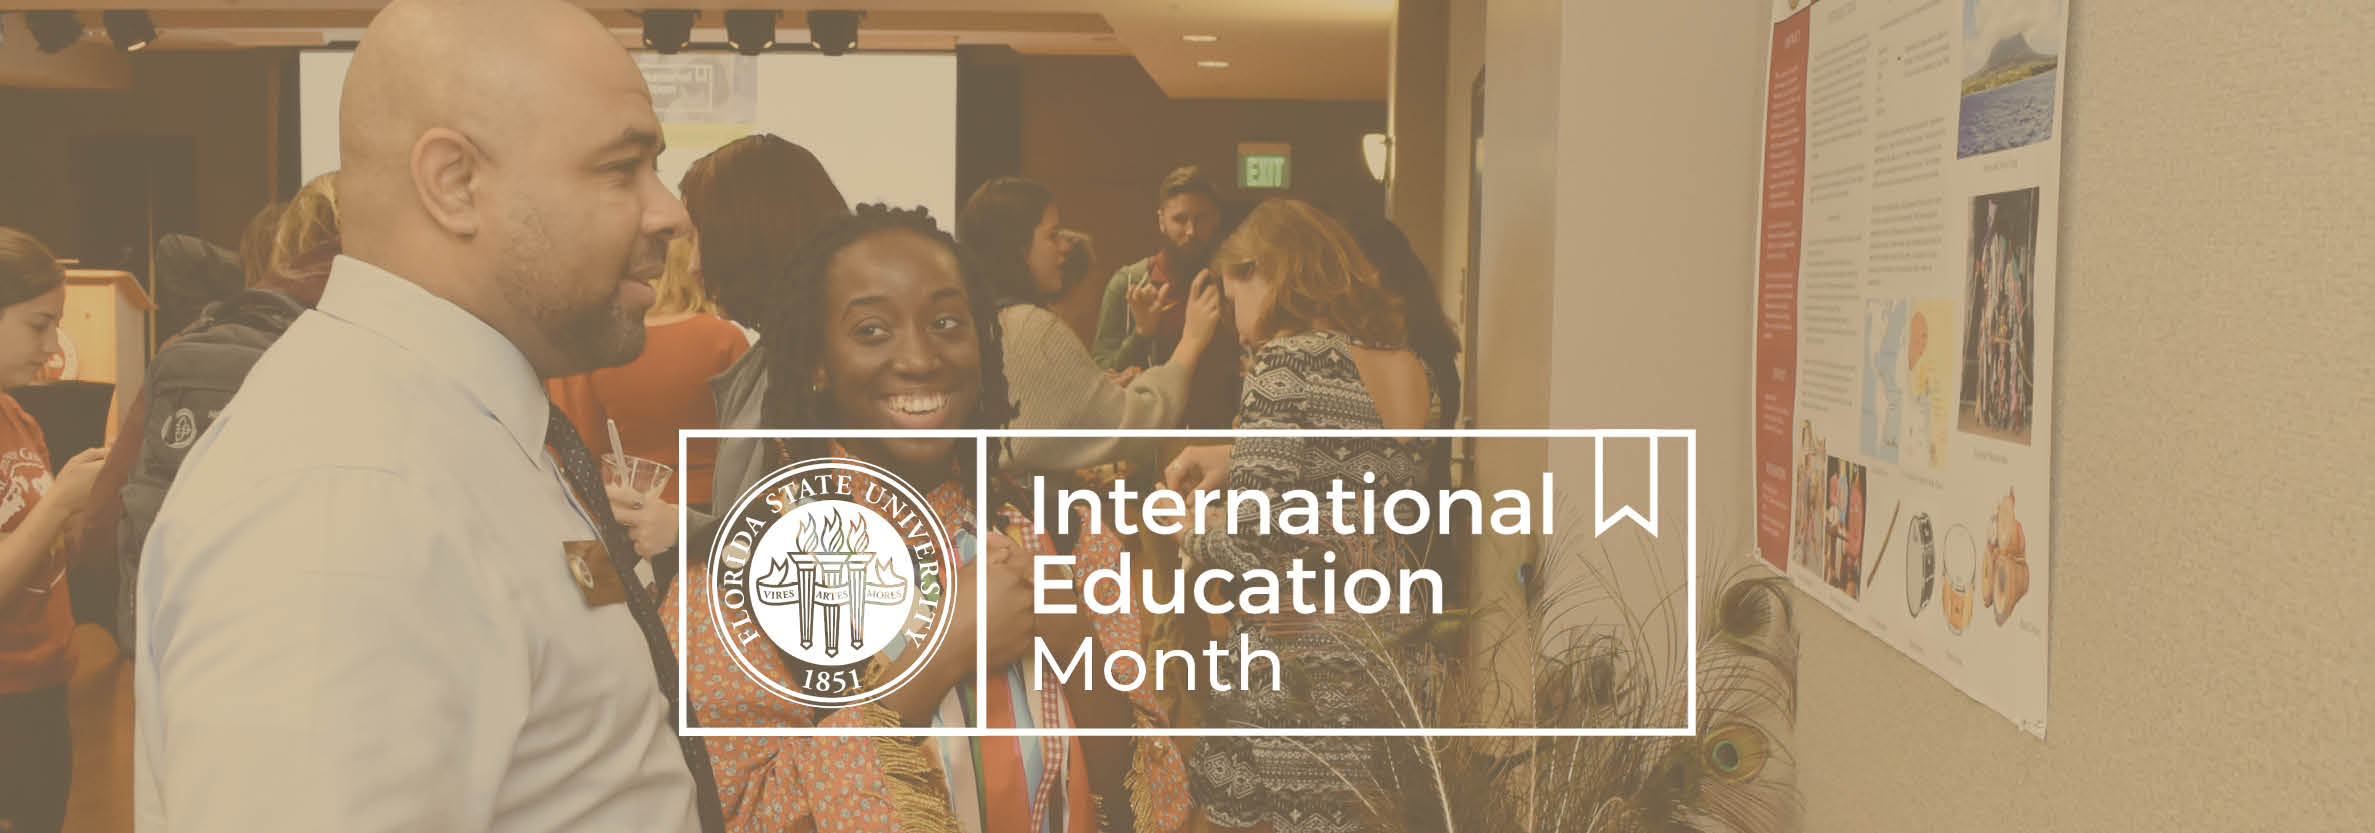 International Education Month – Going Global Showcase